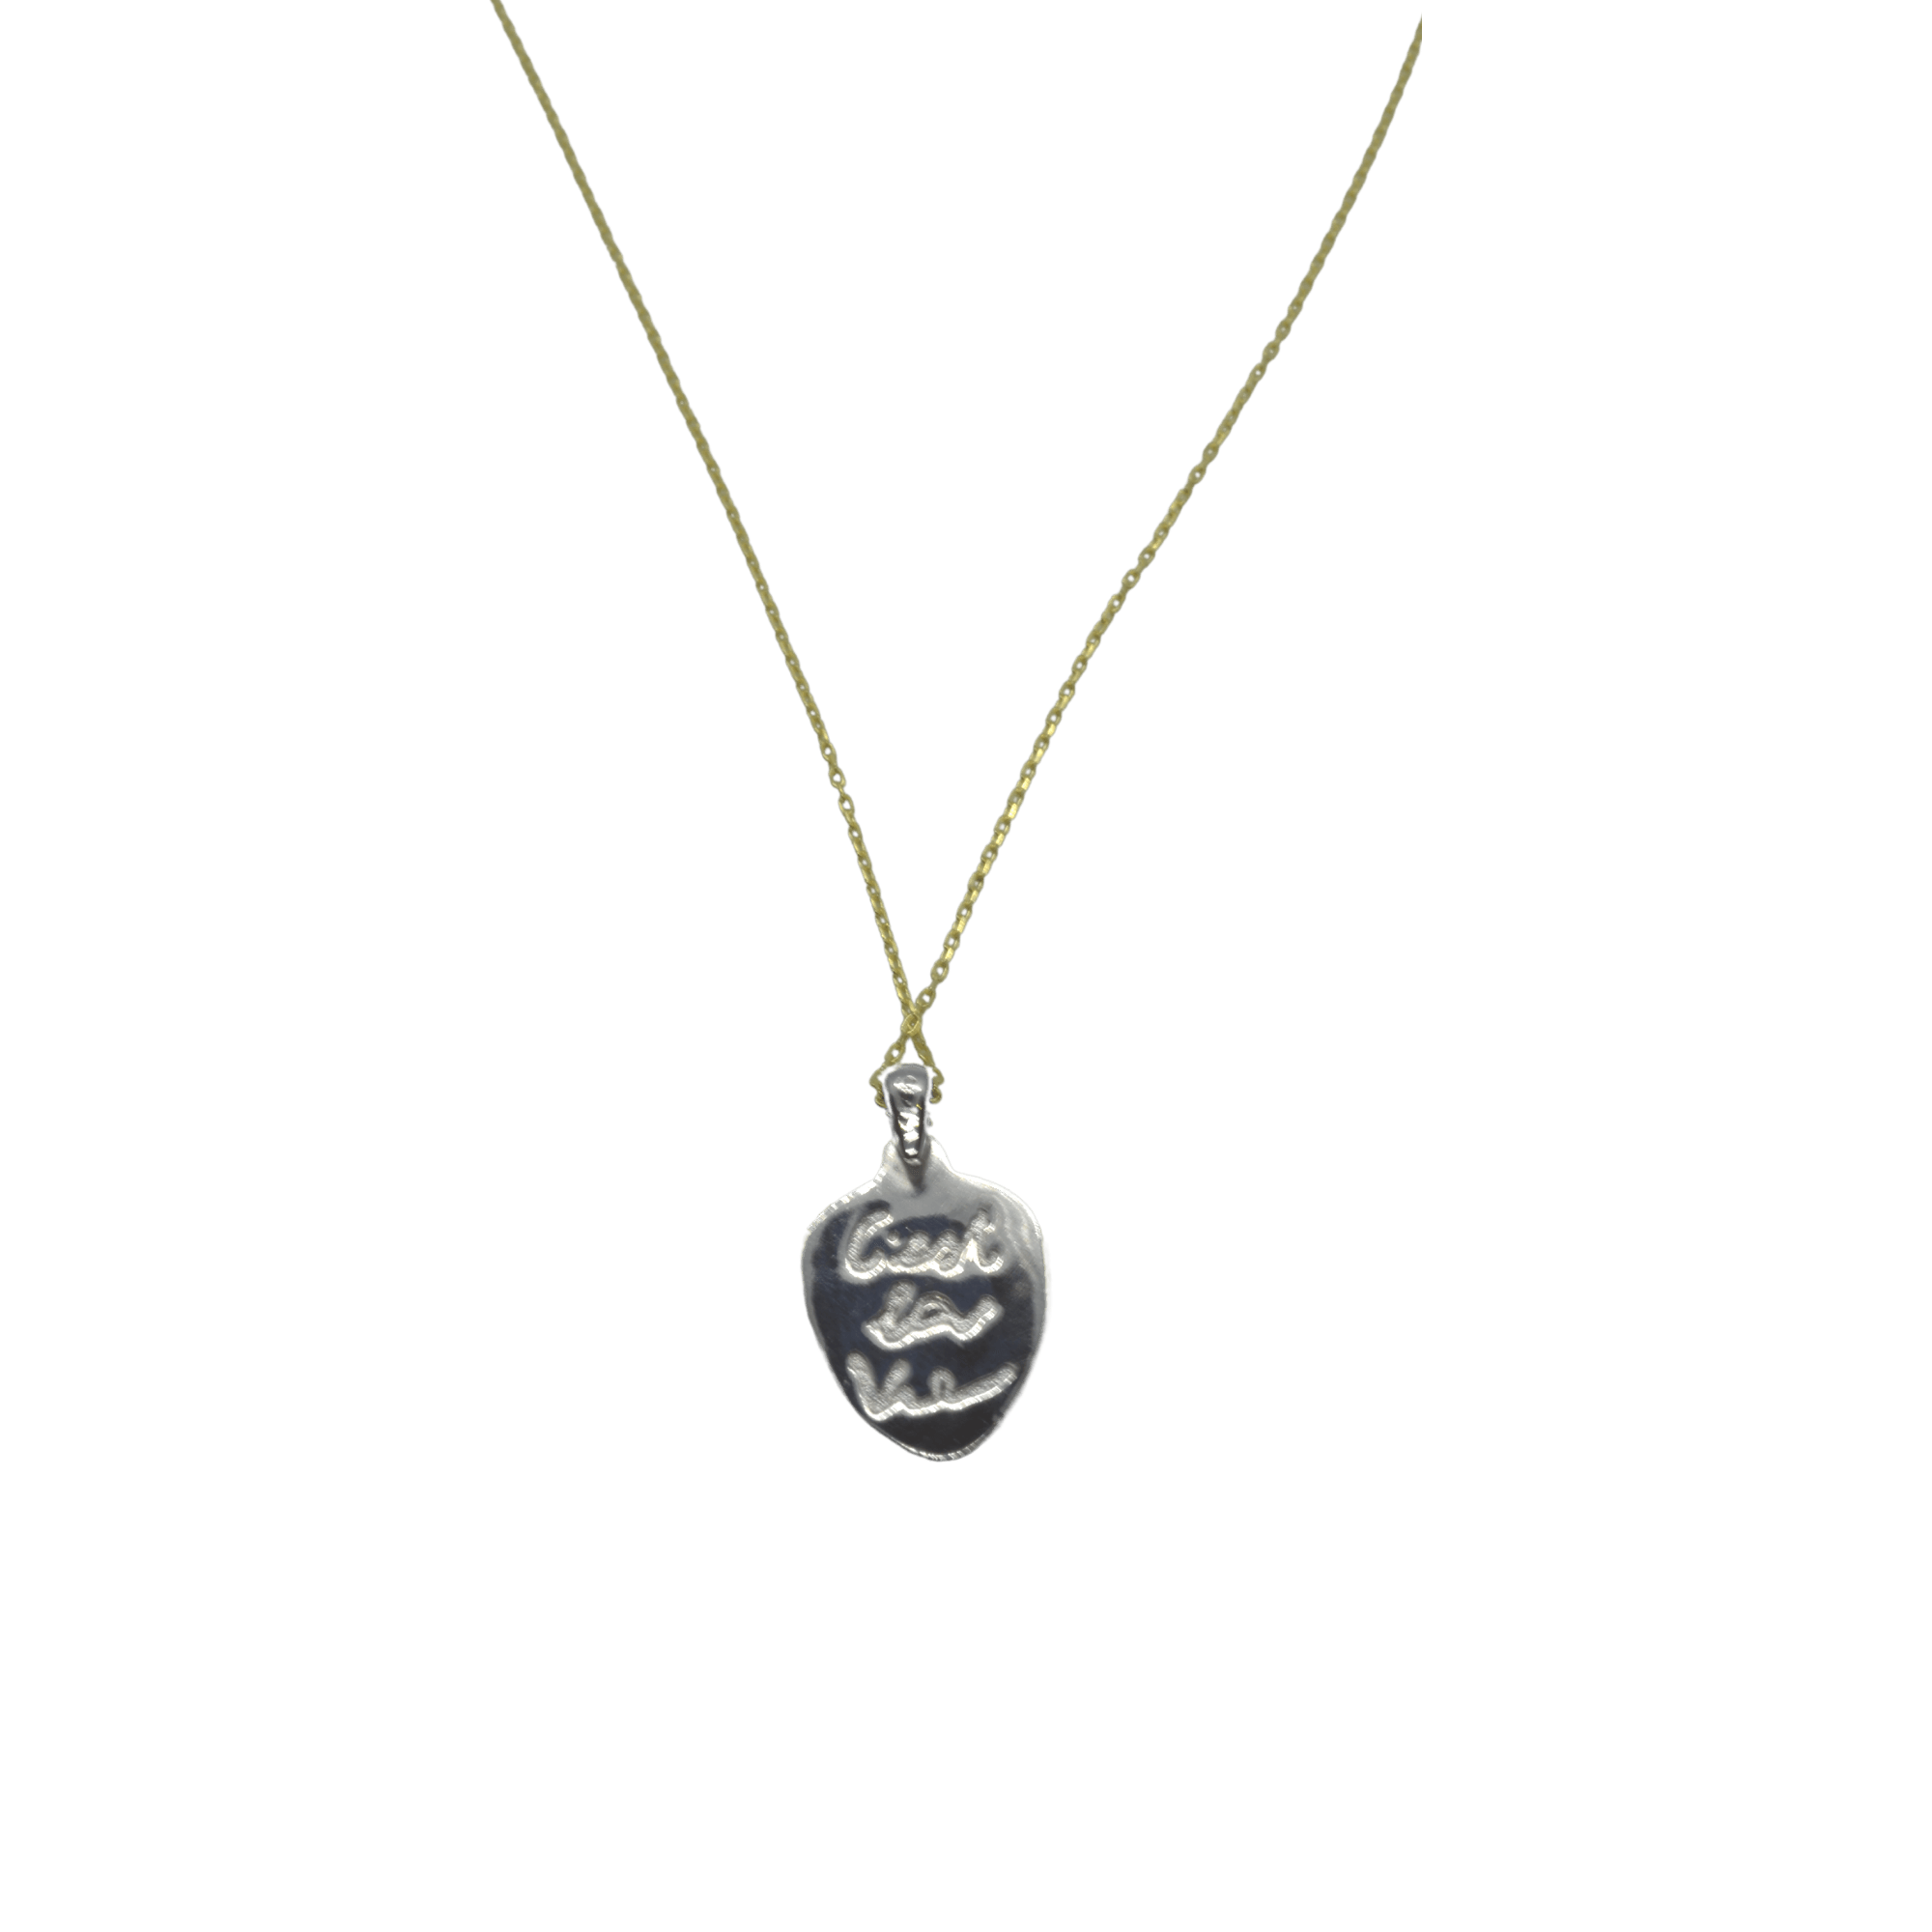 Art Face Silhouette Sterling Silver Necklace - Spero London